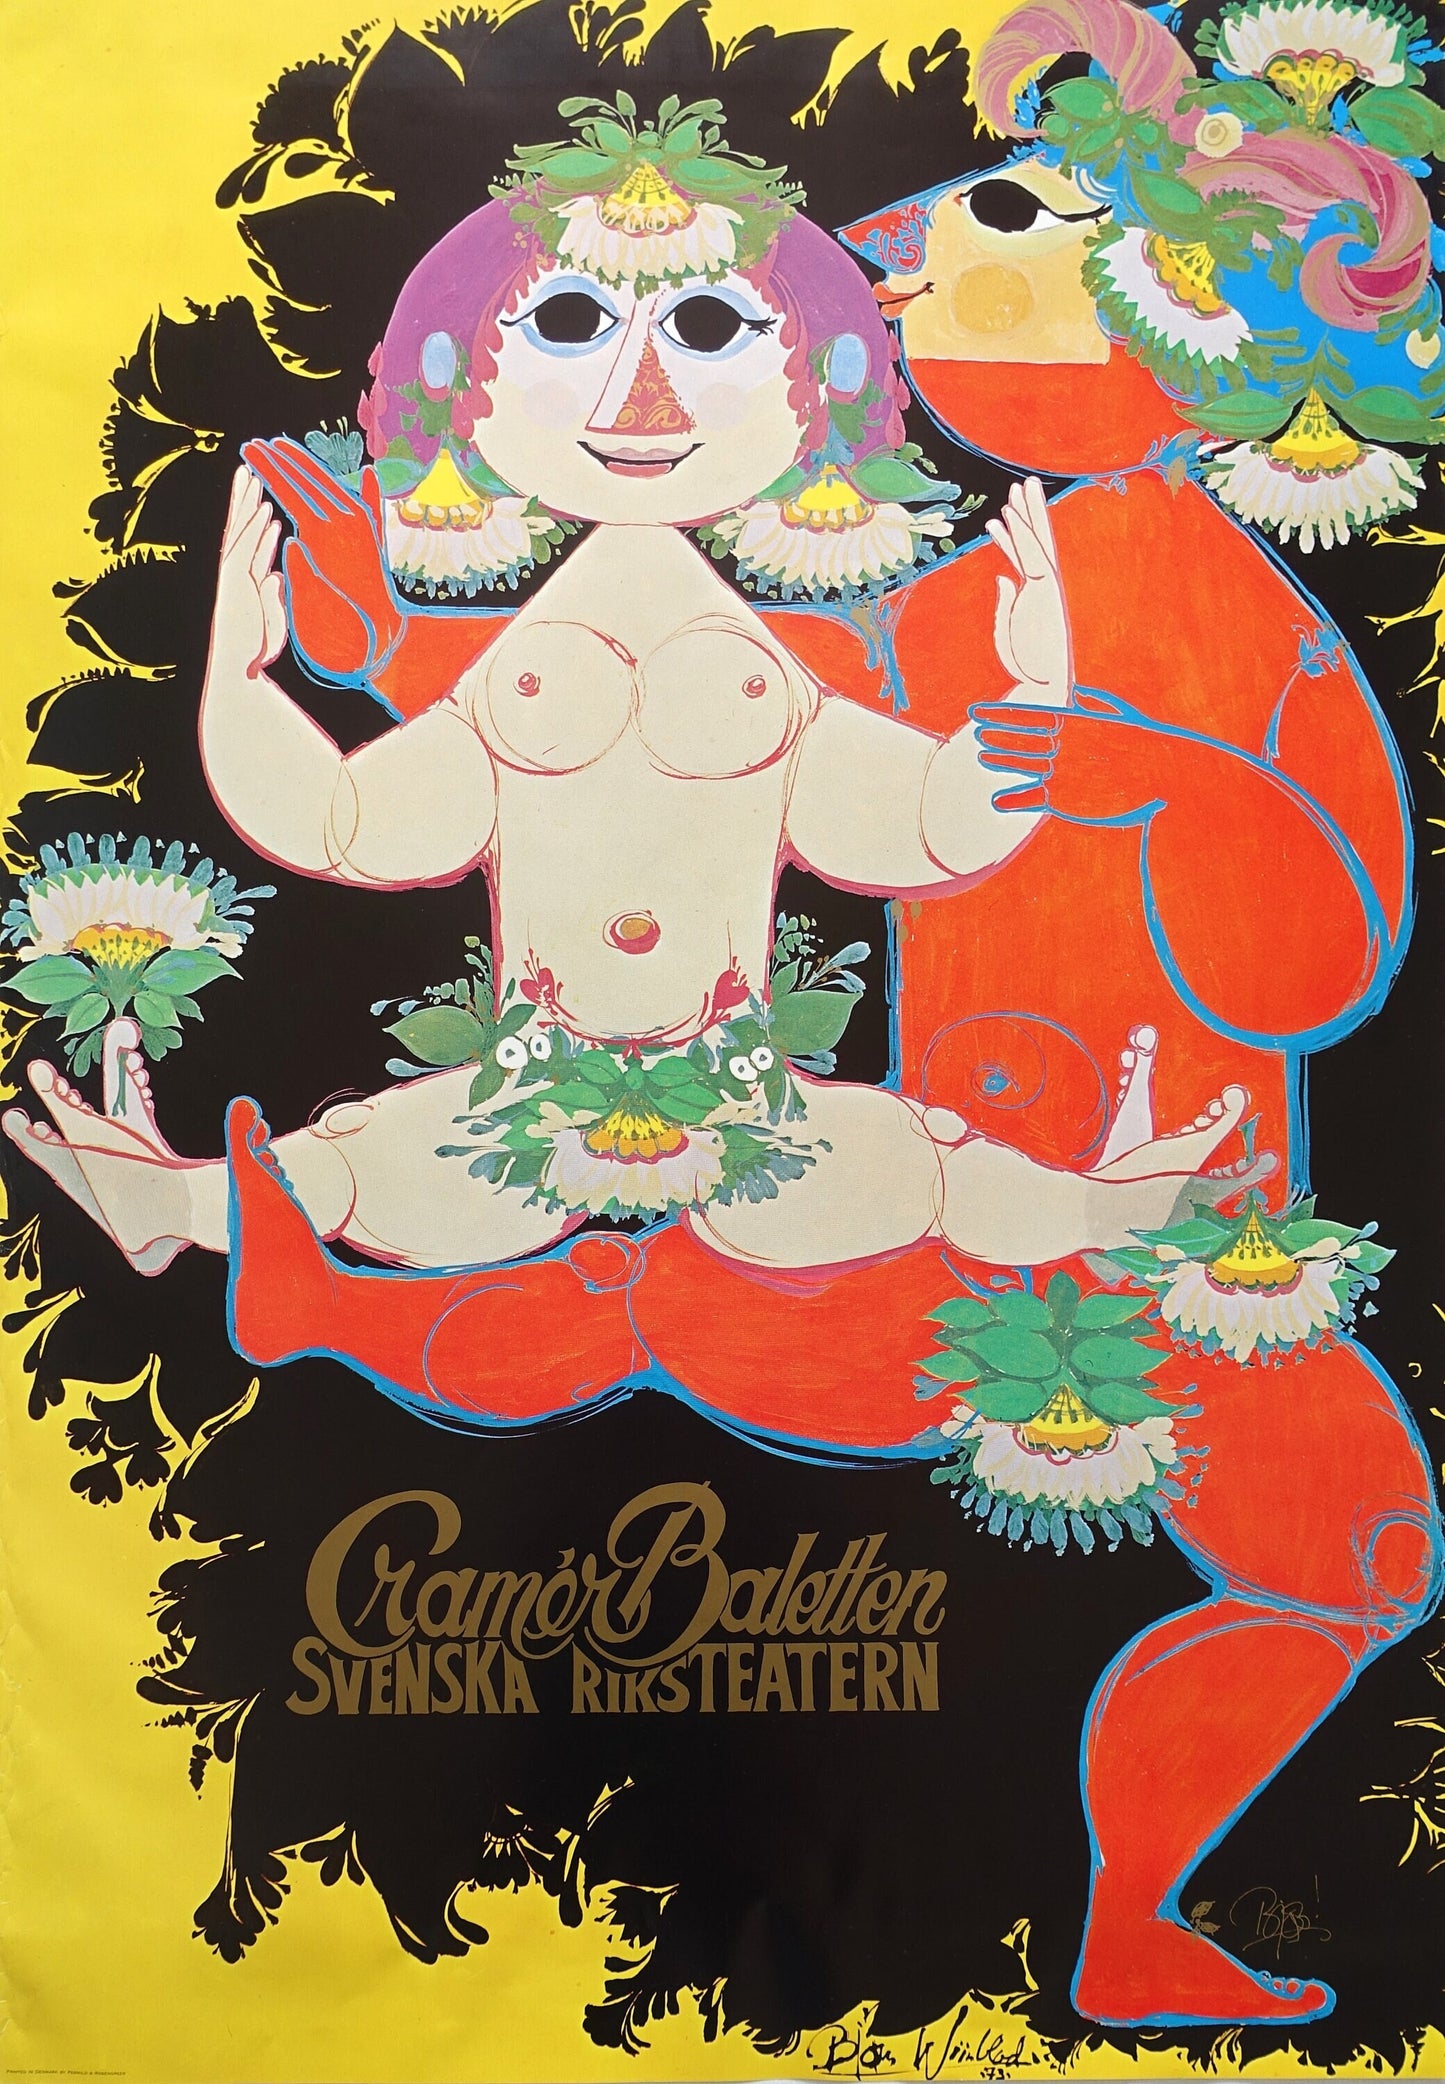 1973 Wiinblad Ballet Poster (Cramér Baletten) - Original Vintage Poster